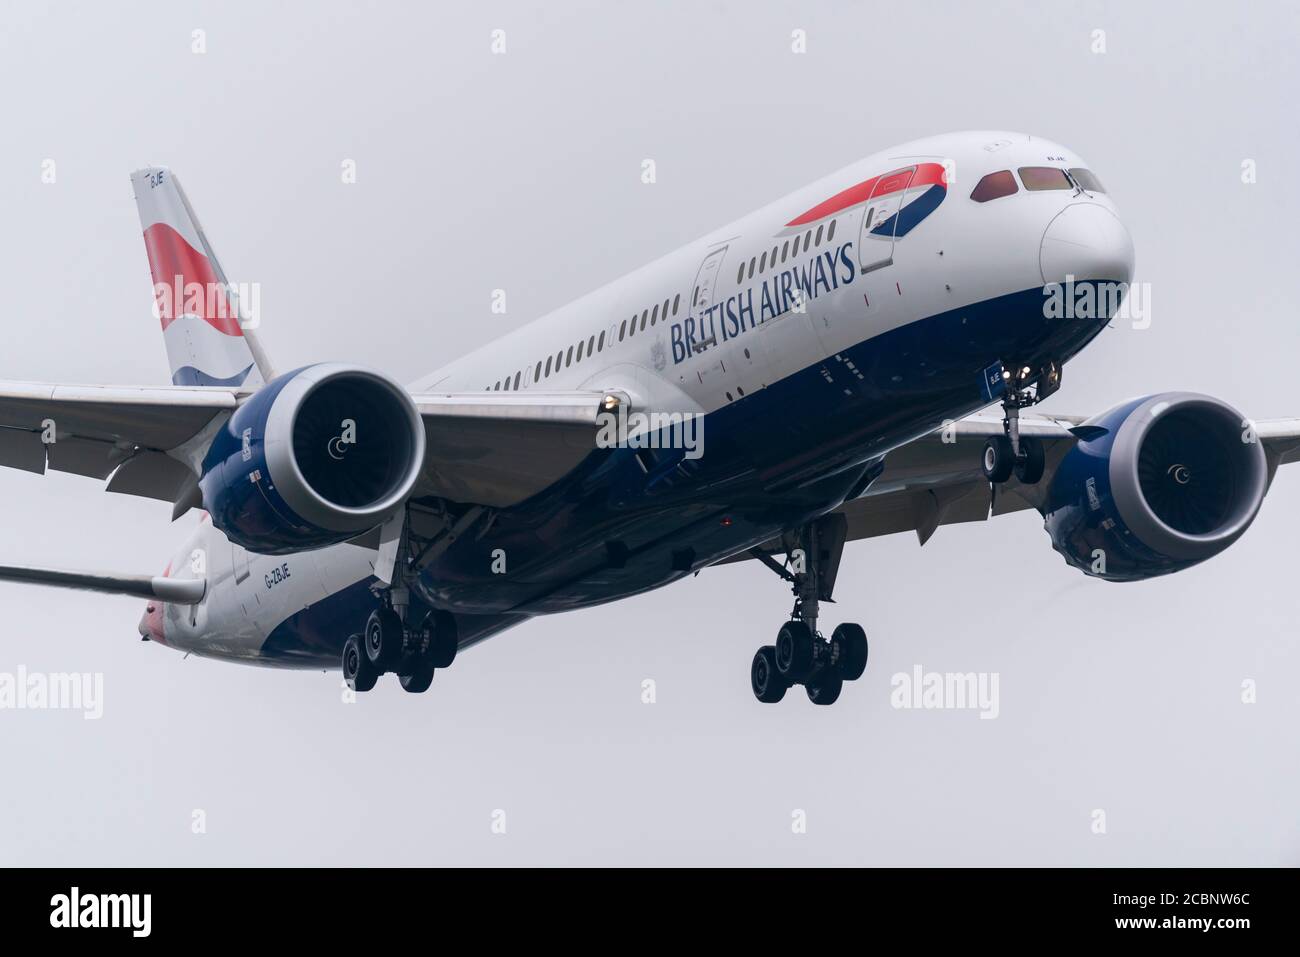 British Airways Boeing 787 Dreamliner jet airliner plane G-ZBJE landing at London Heathrow Airport, UK, during COVID-19 Coronavirus pandemic. Stock Photo